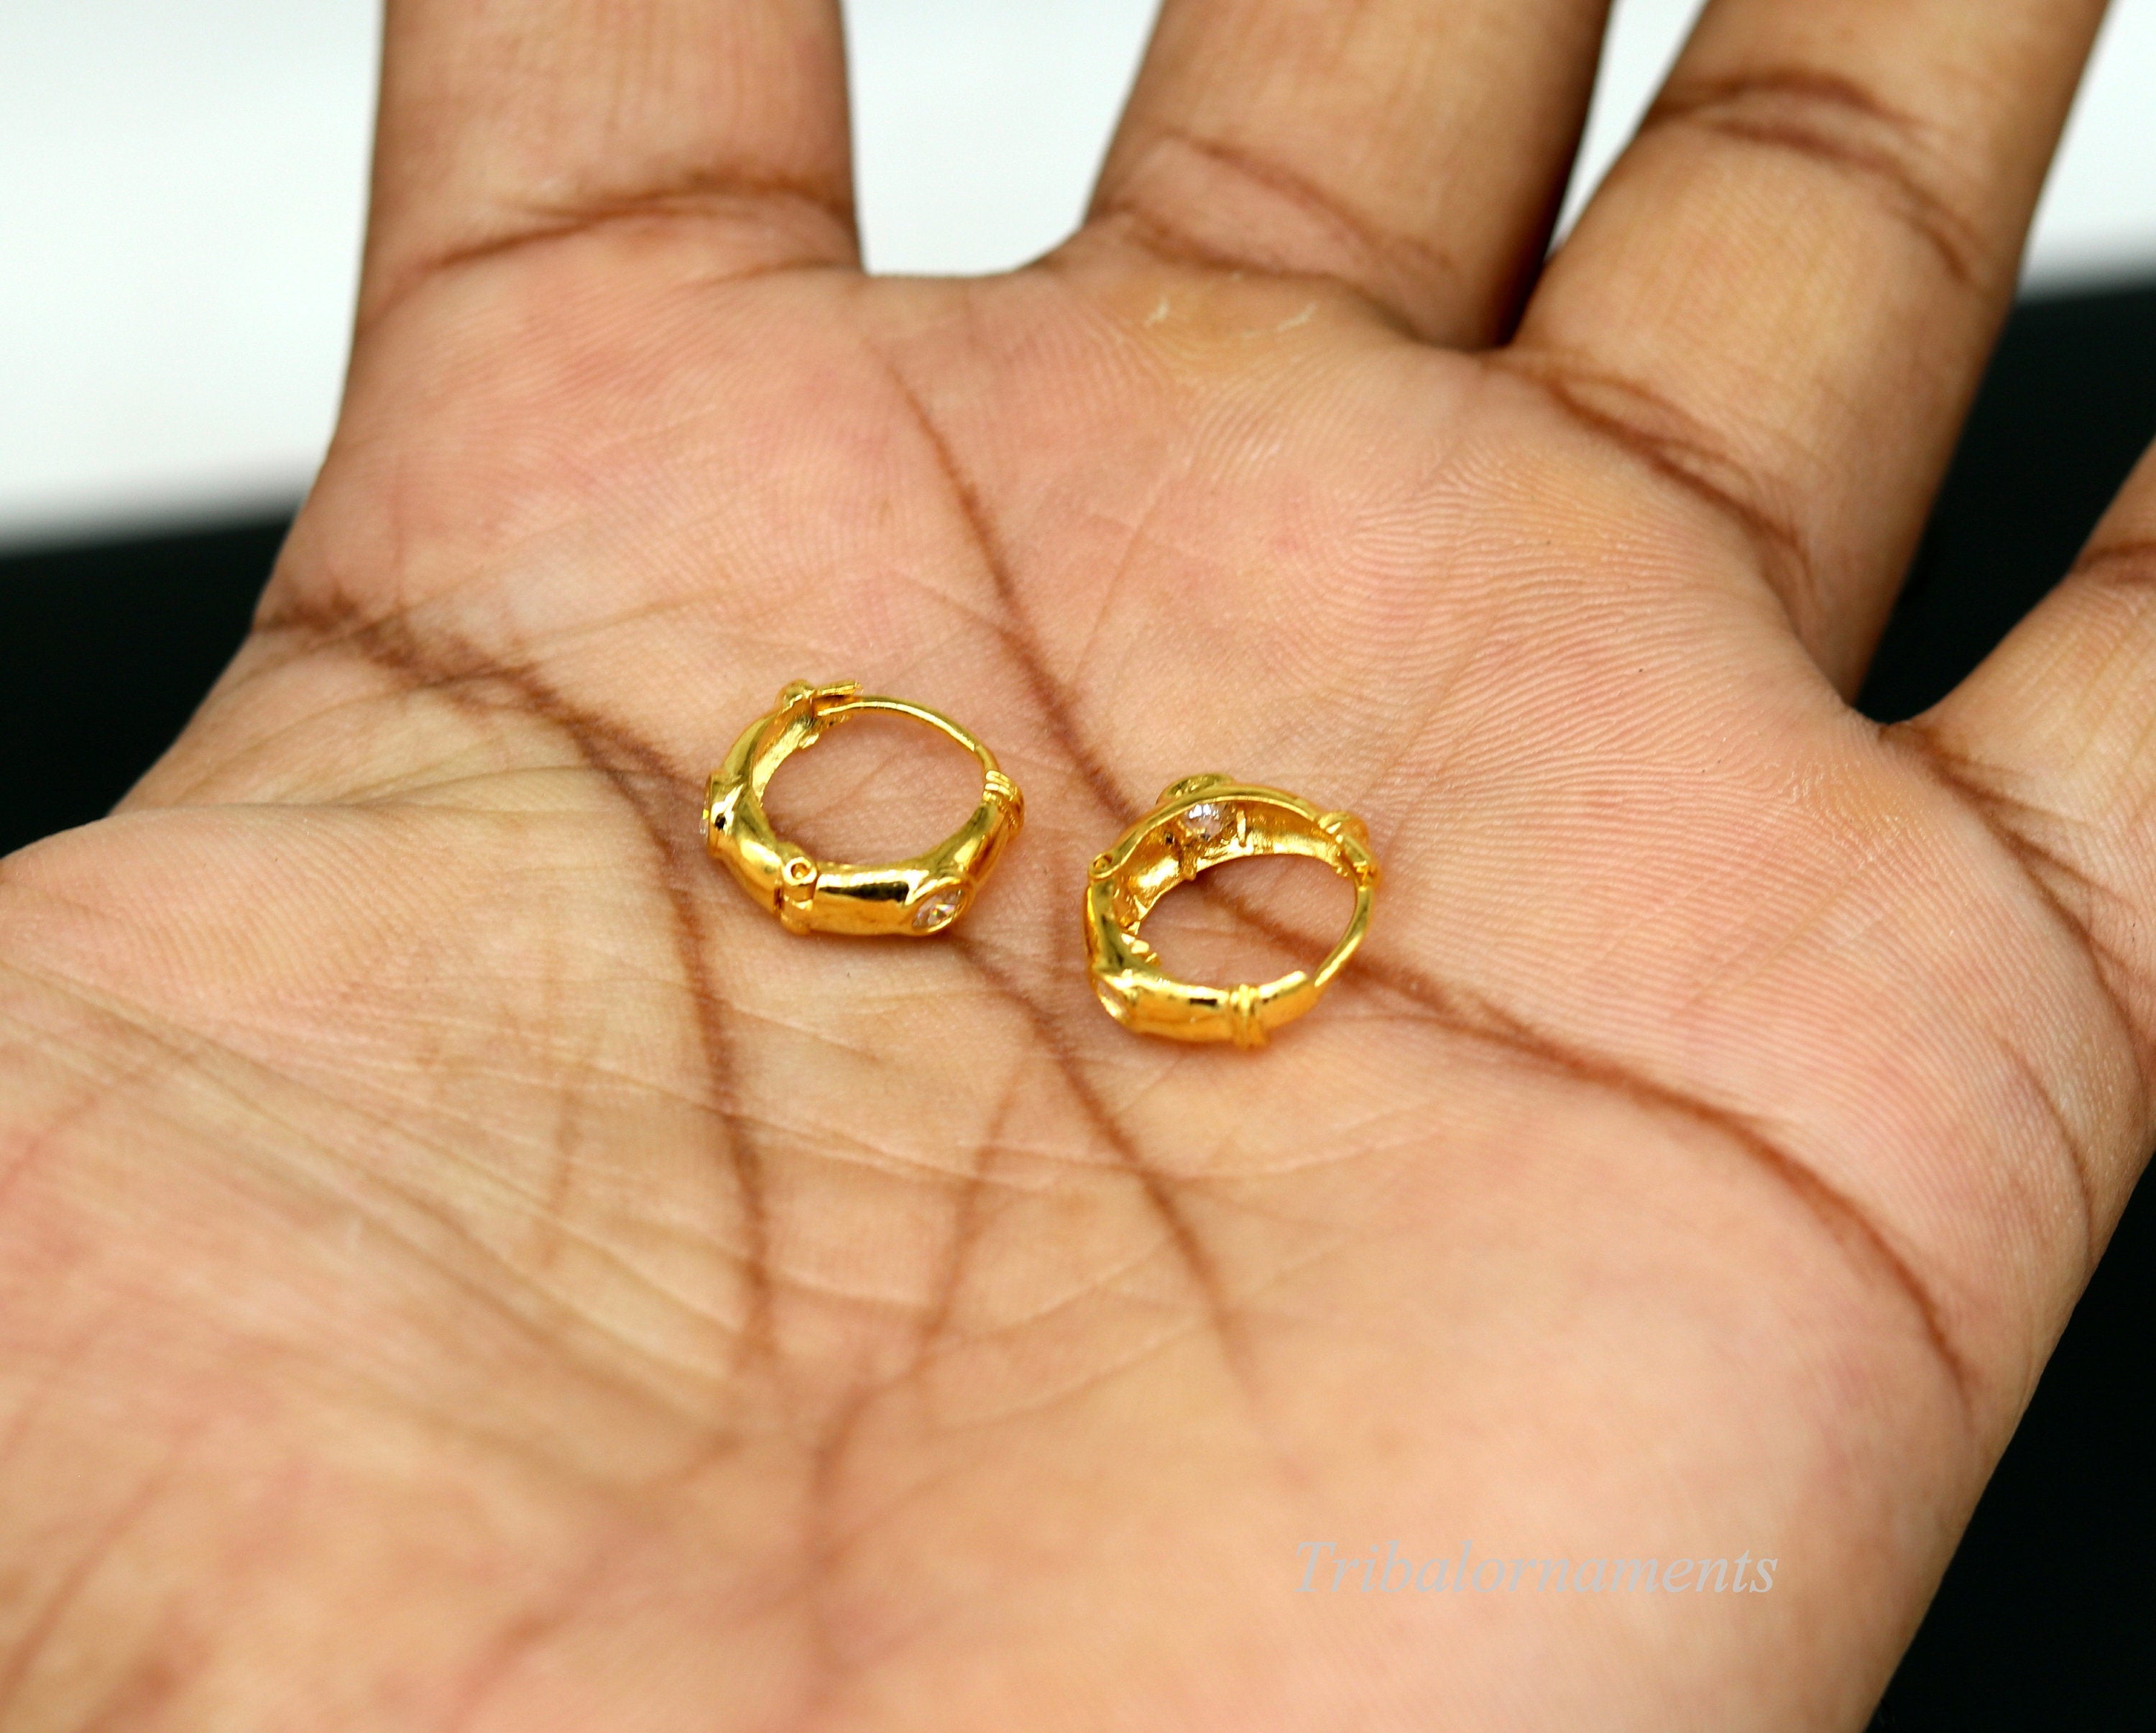 Tiffany Lock Earrings in White Gold with Diamonds, Medium | Tiffany & Co.